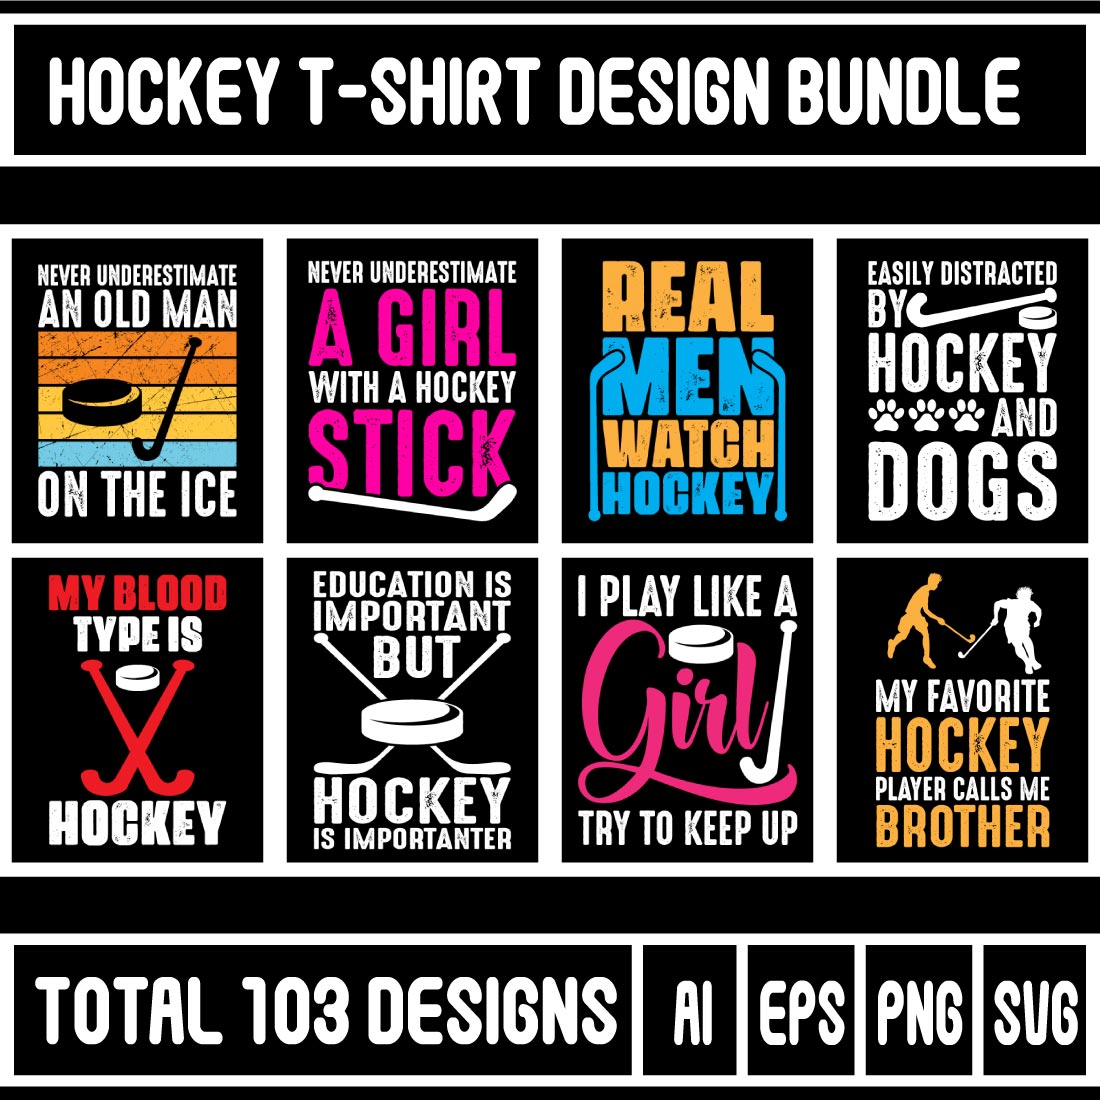 Hockey T-shirt Design Bundle cover image.